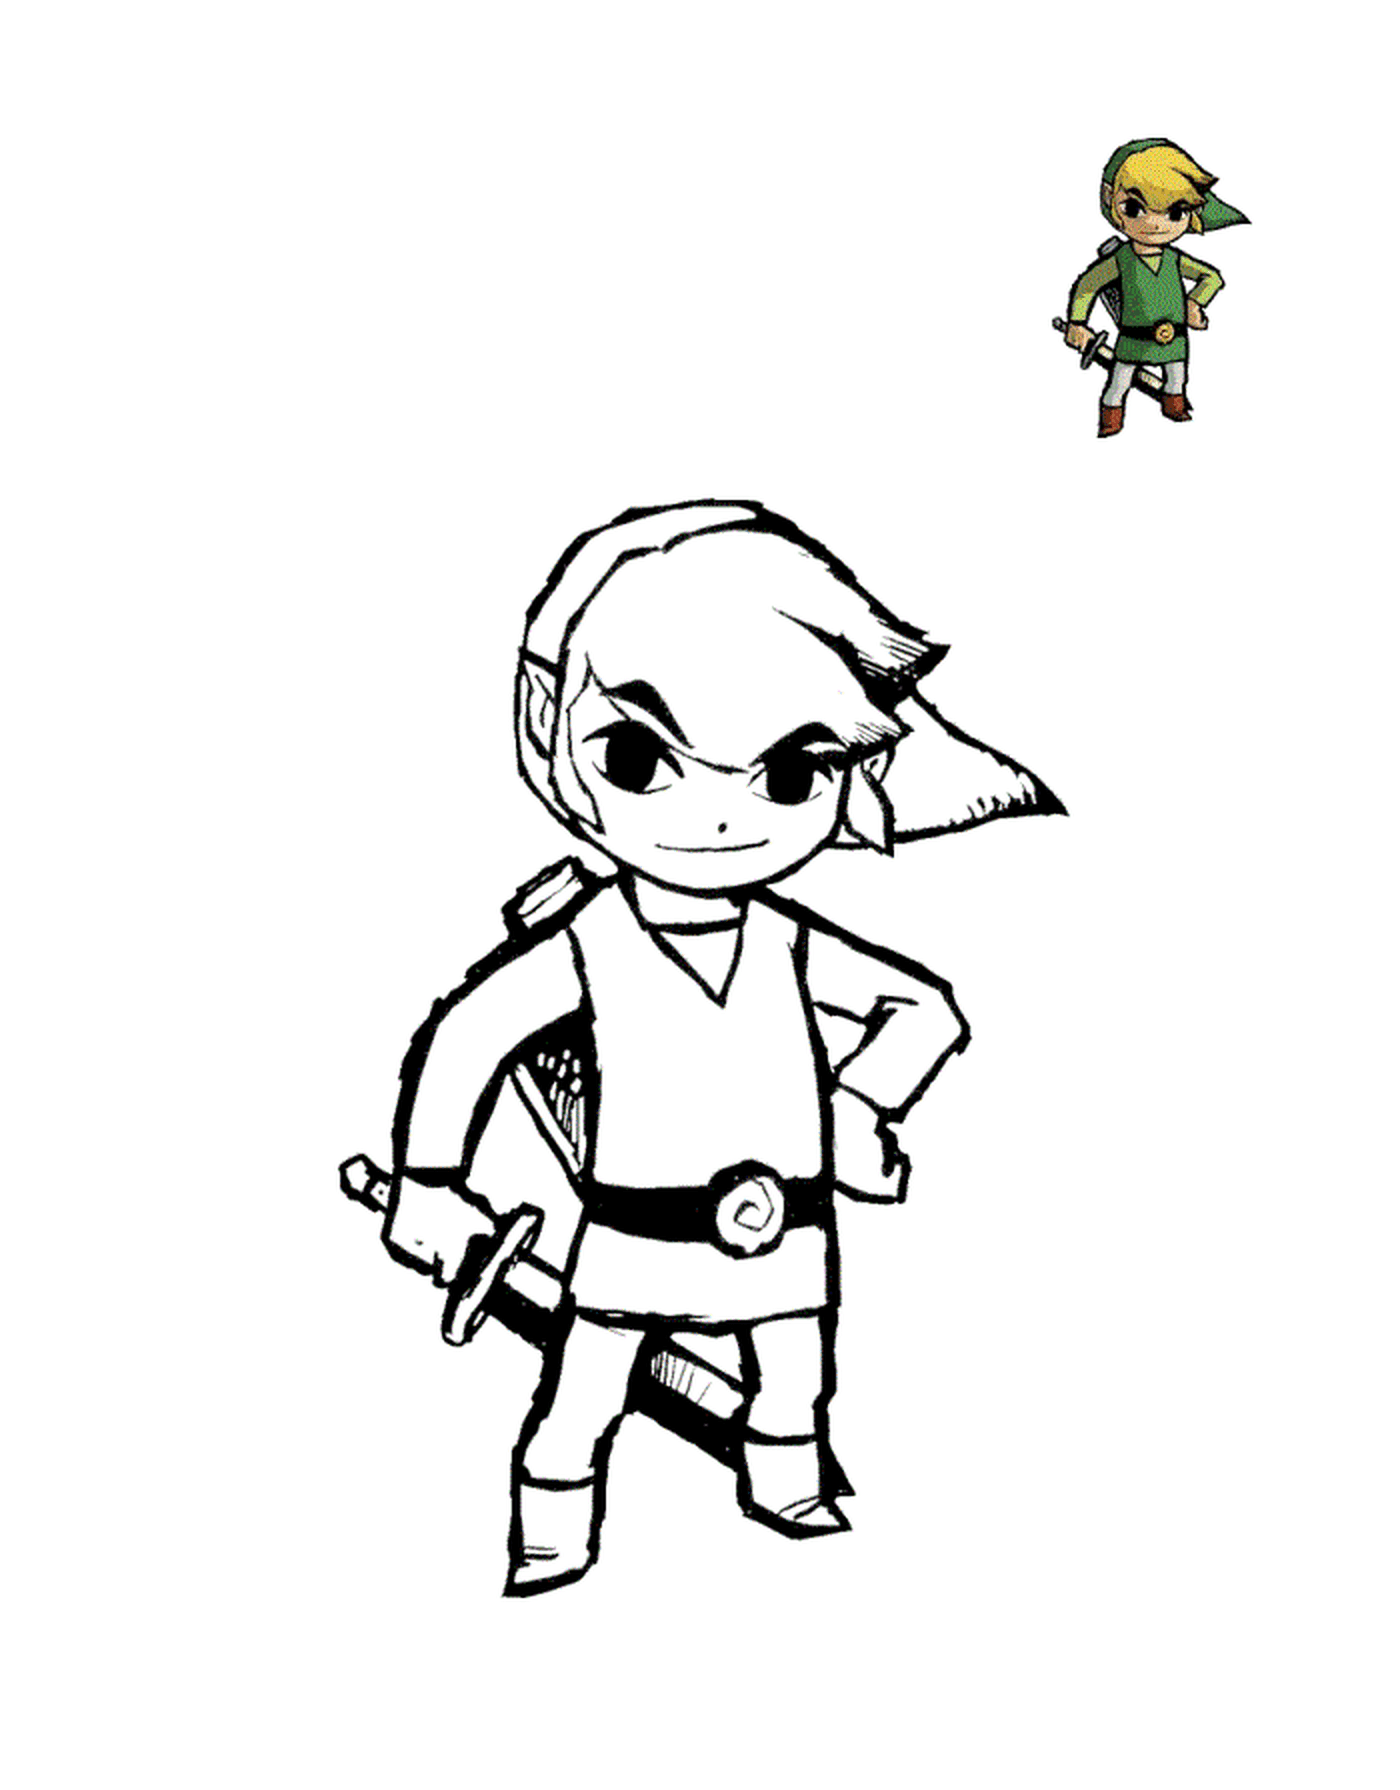  Link, the hero of the Kokiri 